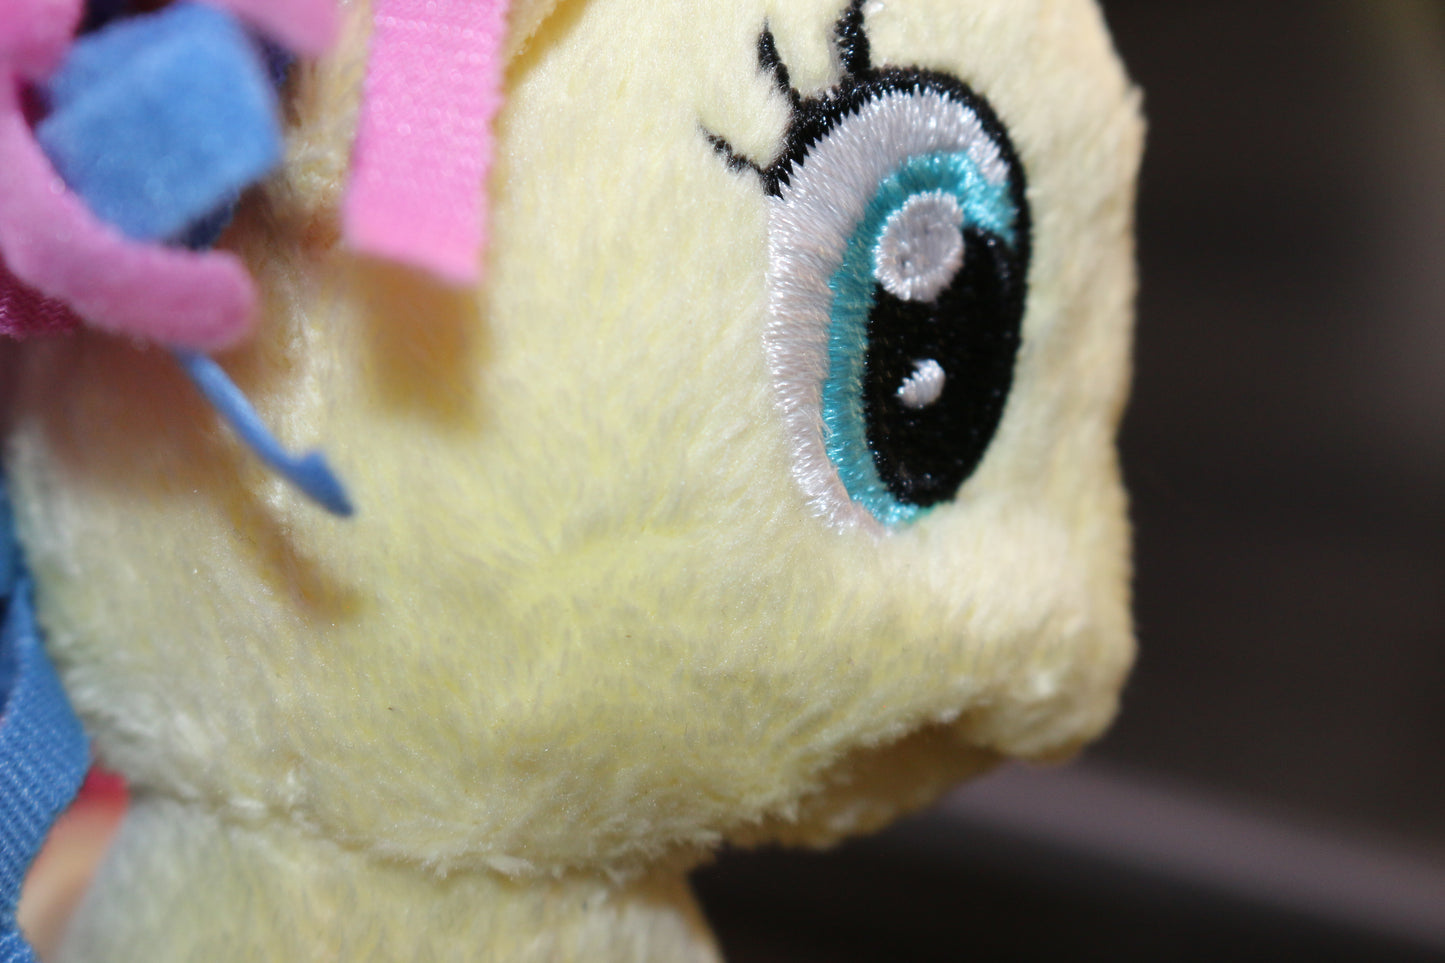 Plush My Little Pony Sweetie Drops Bonbon 2014 Yellow 5.5X4”